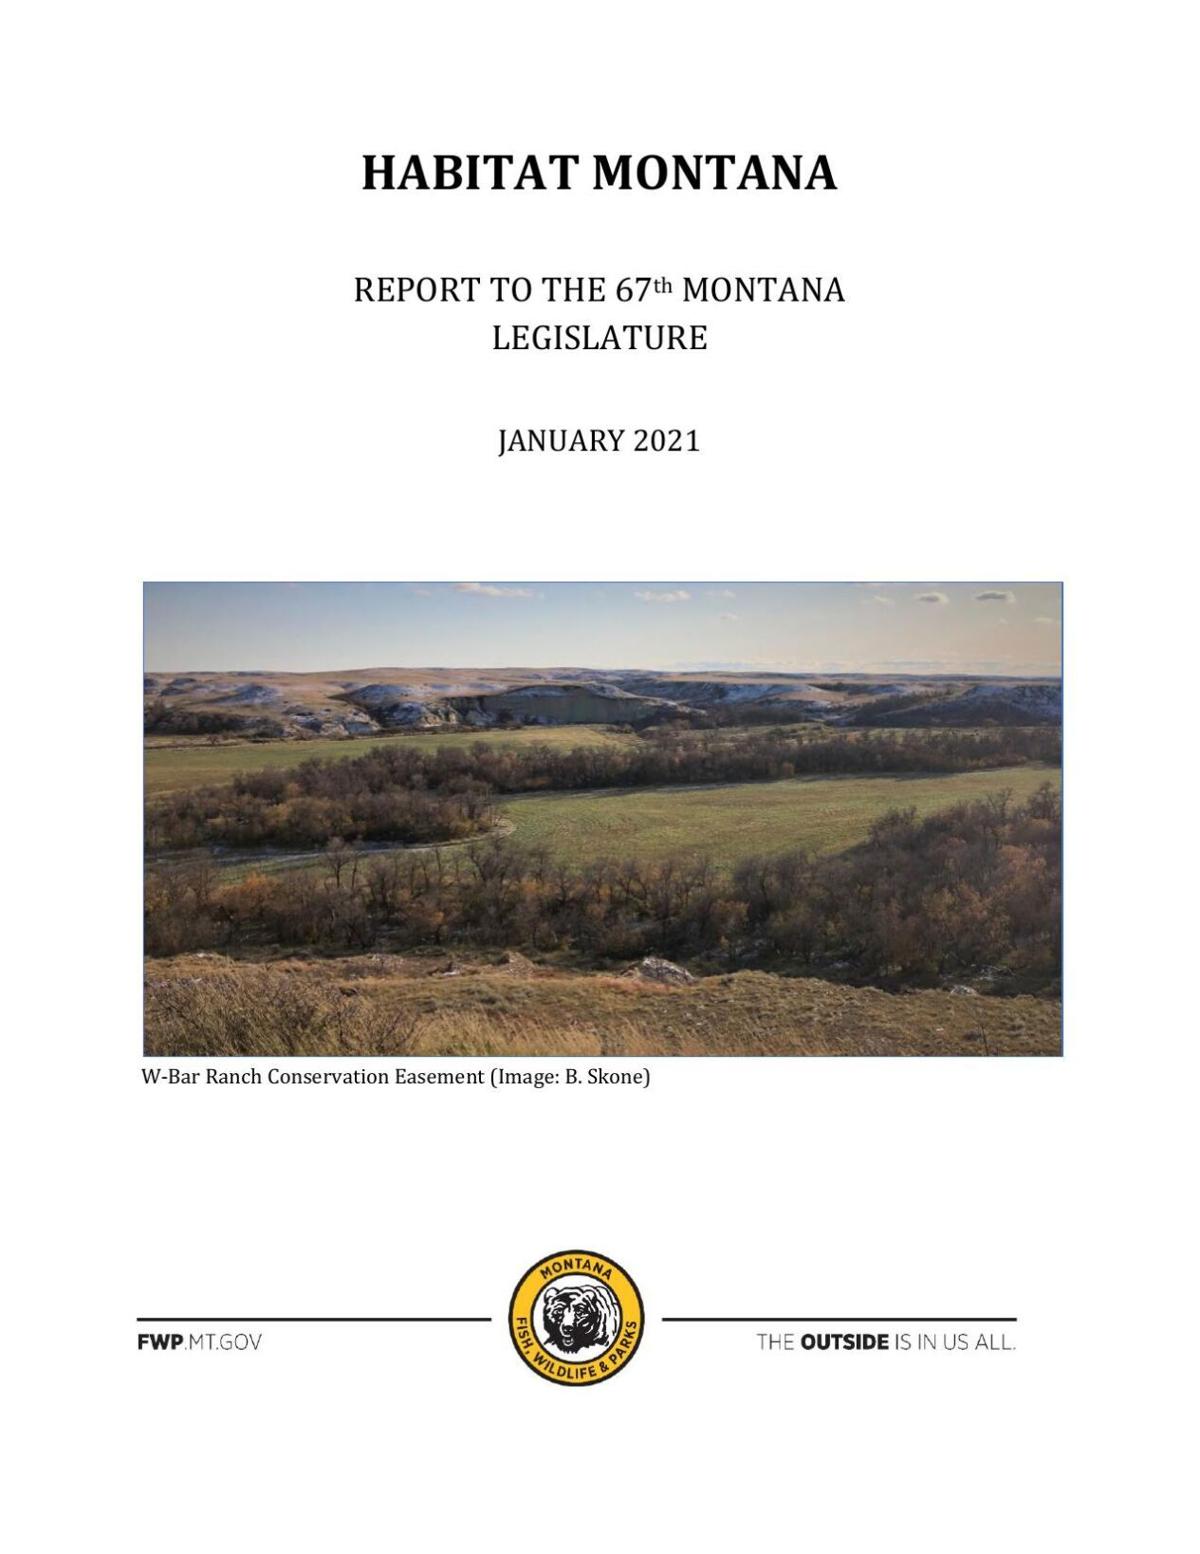 Habitat Montana 2021 Report